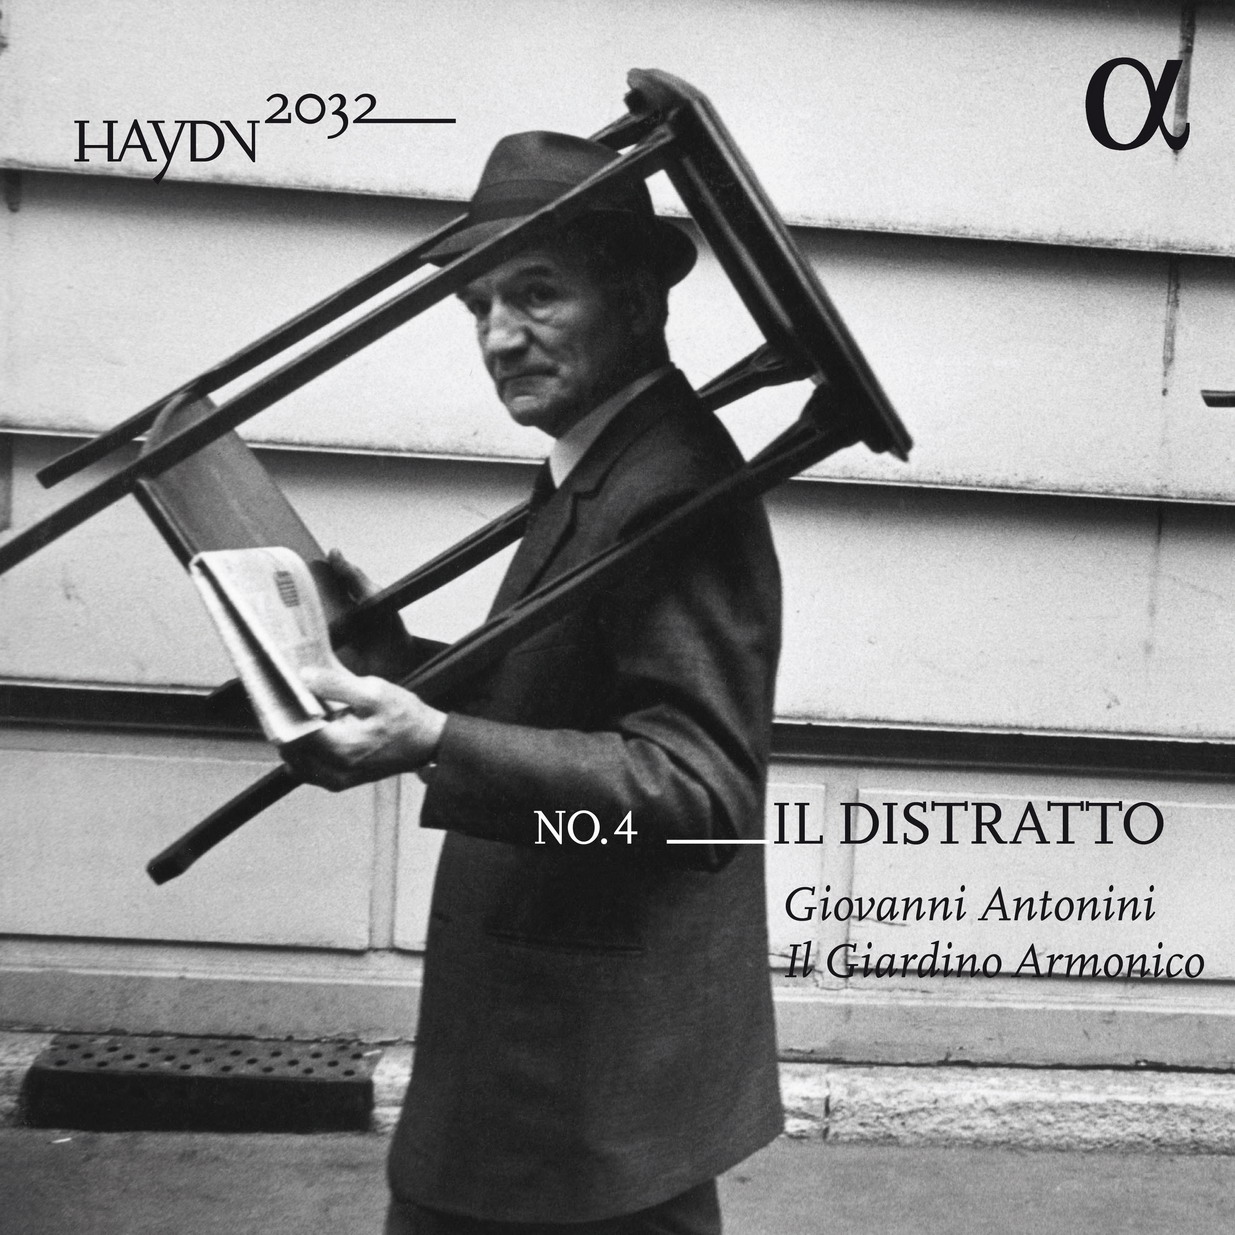 Haydn 2032, Vol. 4: Il distratto - Giovanni Antonini, Il Giardino Armonico (2017) [Qobuz FLAC 24bit/96kHz]